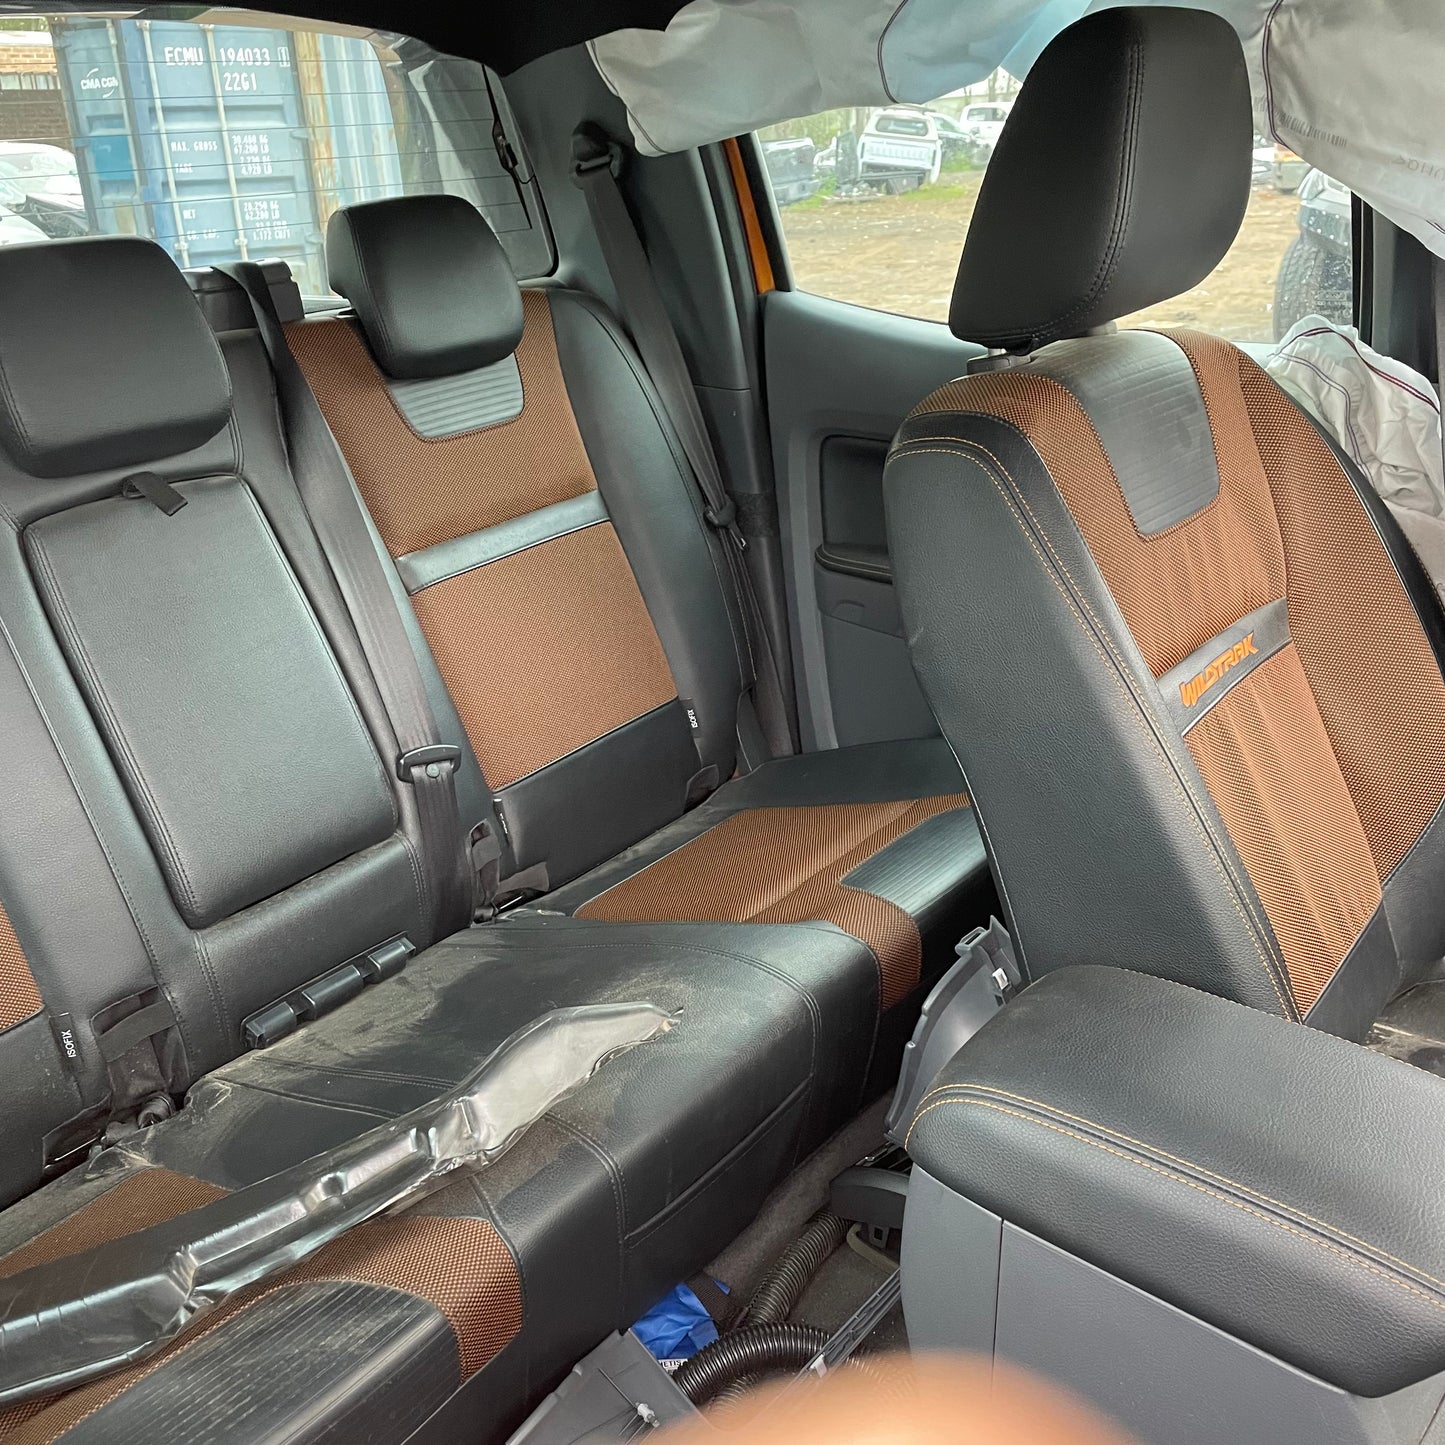 Ford Ranger 4x4 Wildtrak Double Cab 2017 3.2L Diesel Automatic Transmission